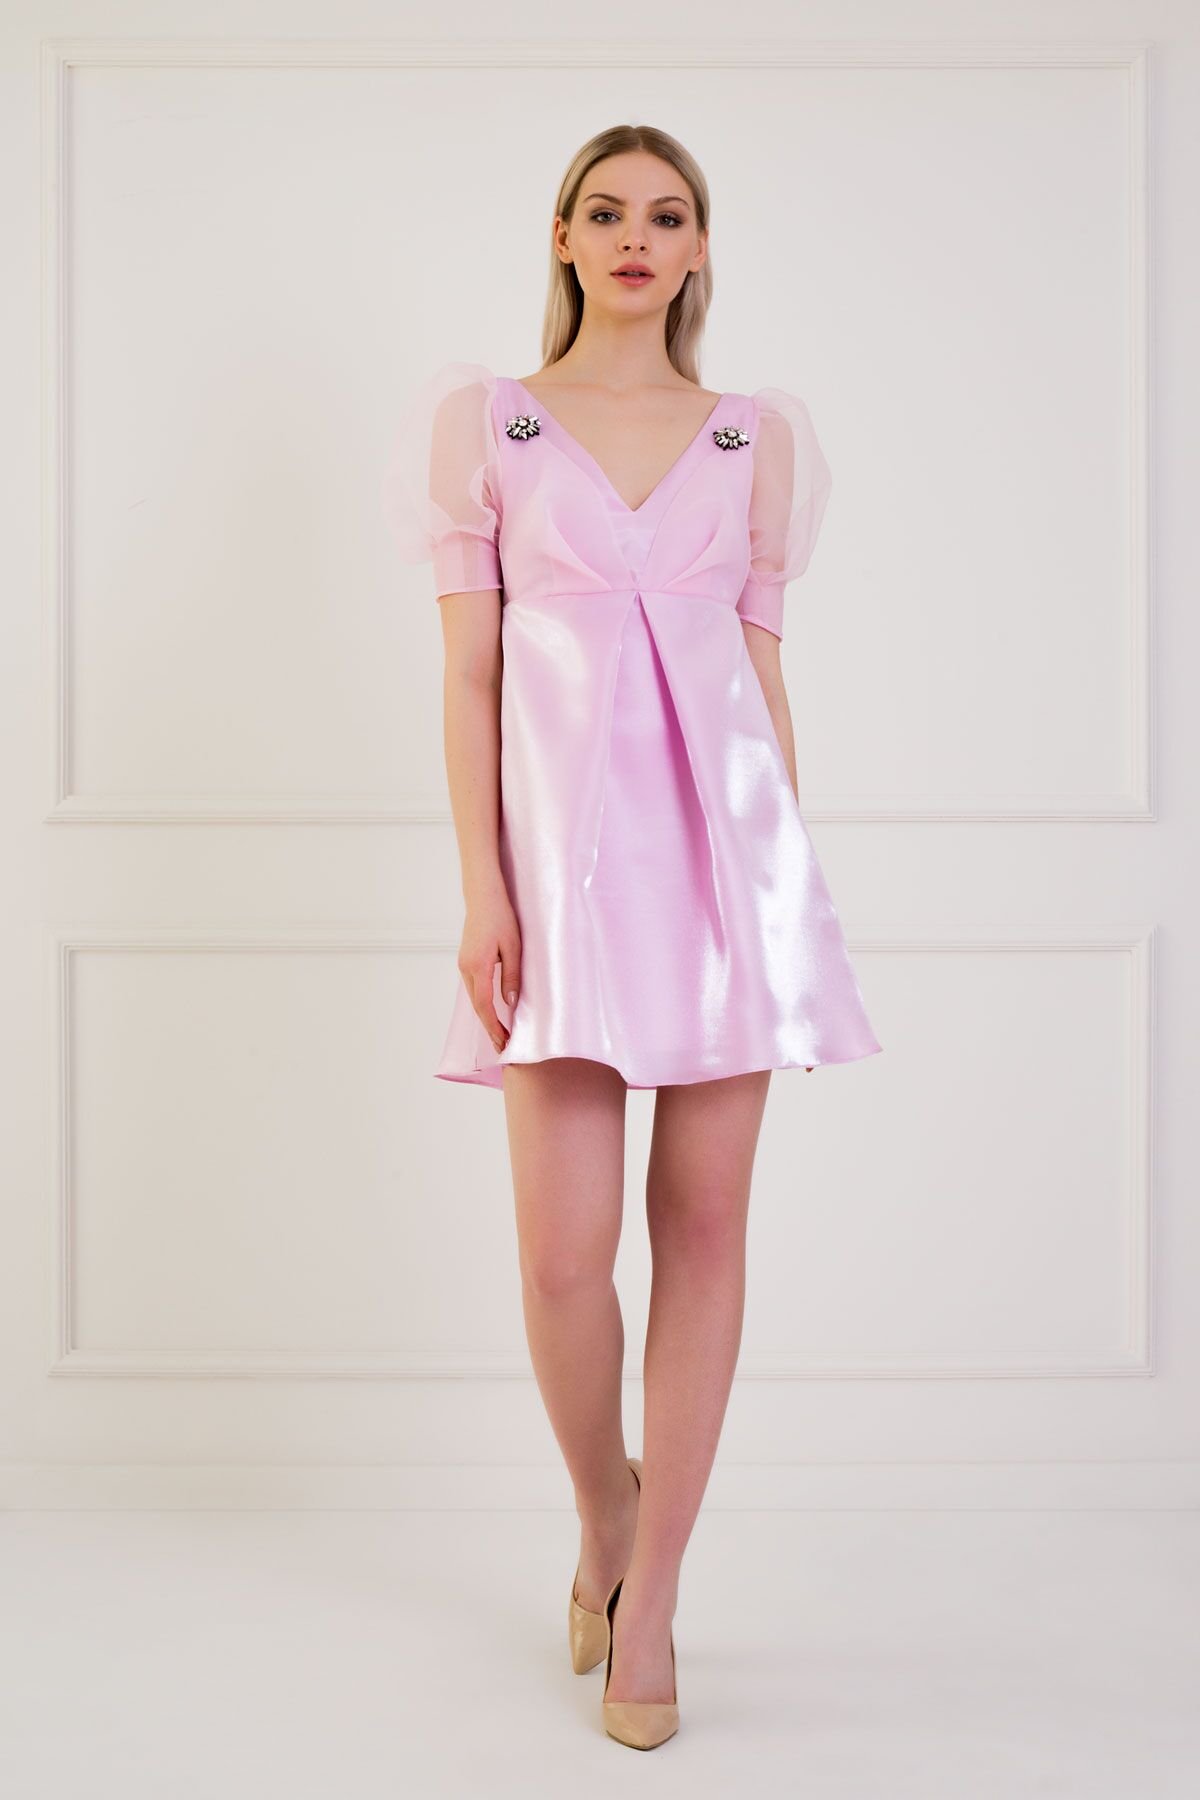 Sleeve Detailed V Neck Brooch Pink Satin Party Dress